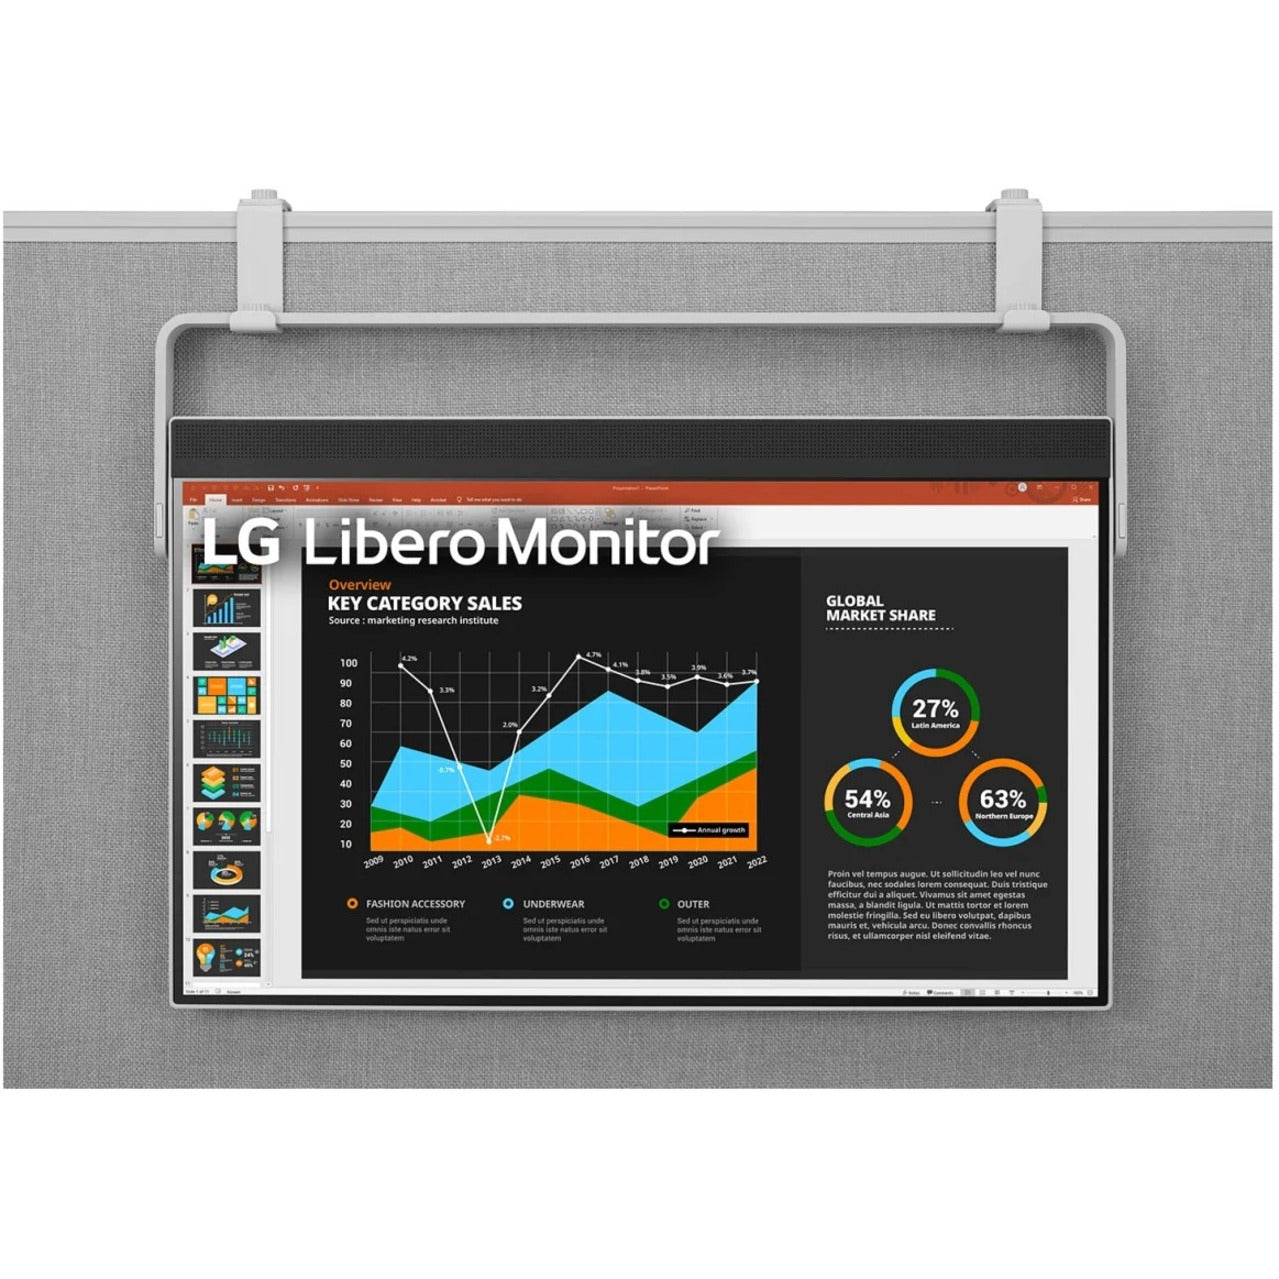 LG 27BQ70QC-S 27" QHD Libero Monitor with Detachable Full HD Webcam, Super Resolution+, HDR, Eye Care Technology